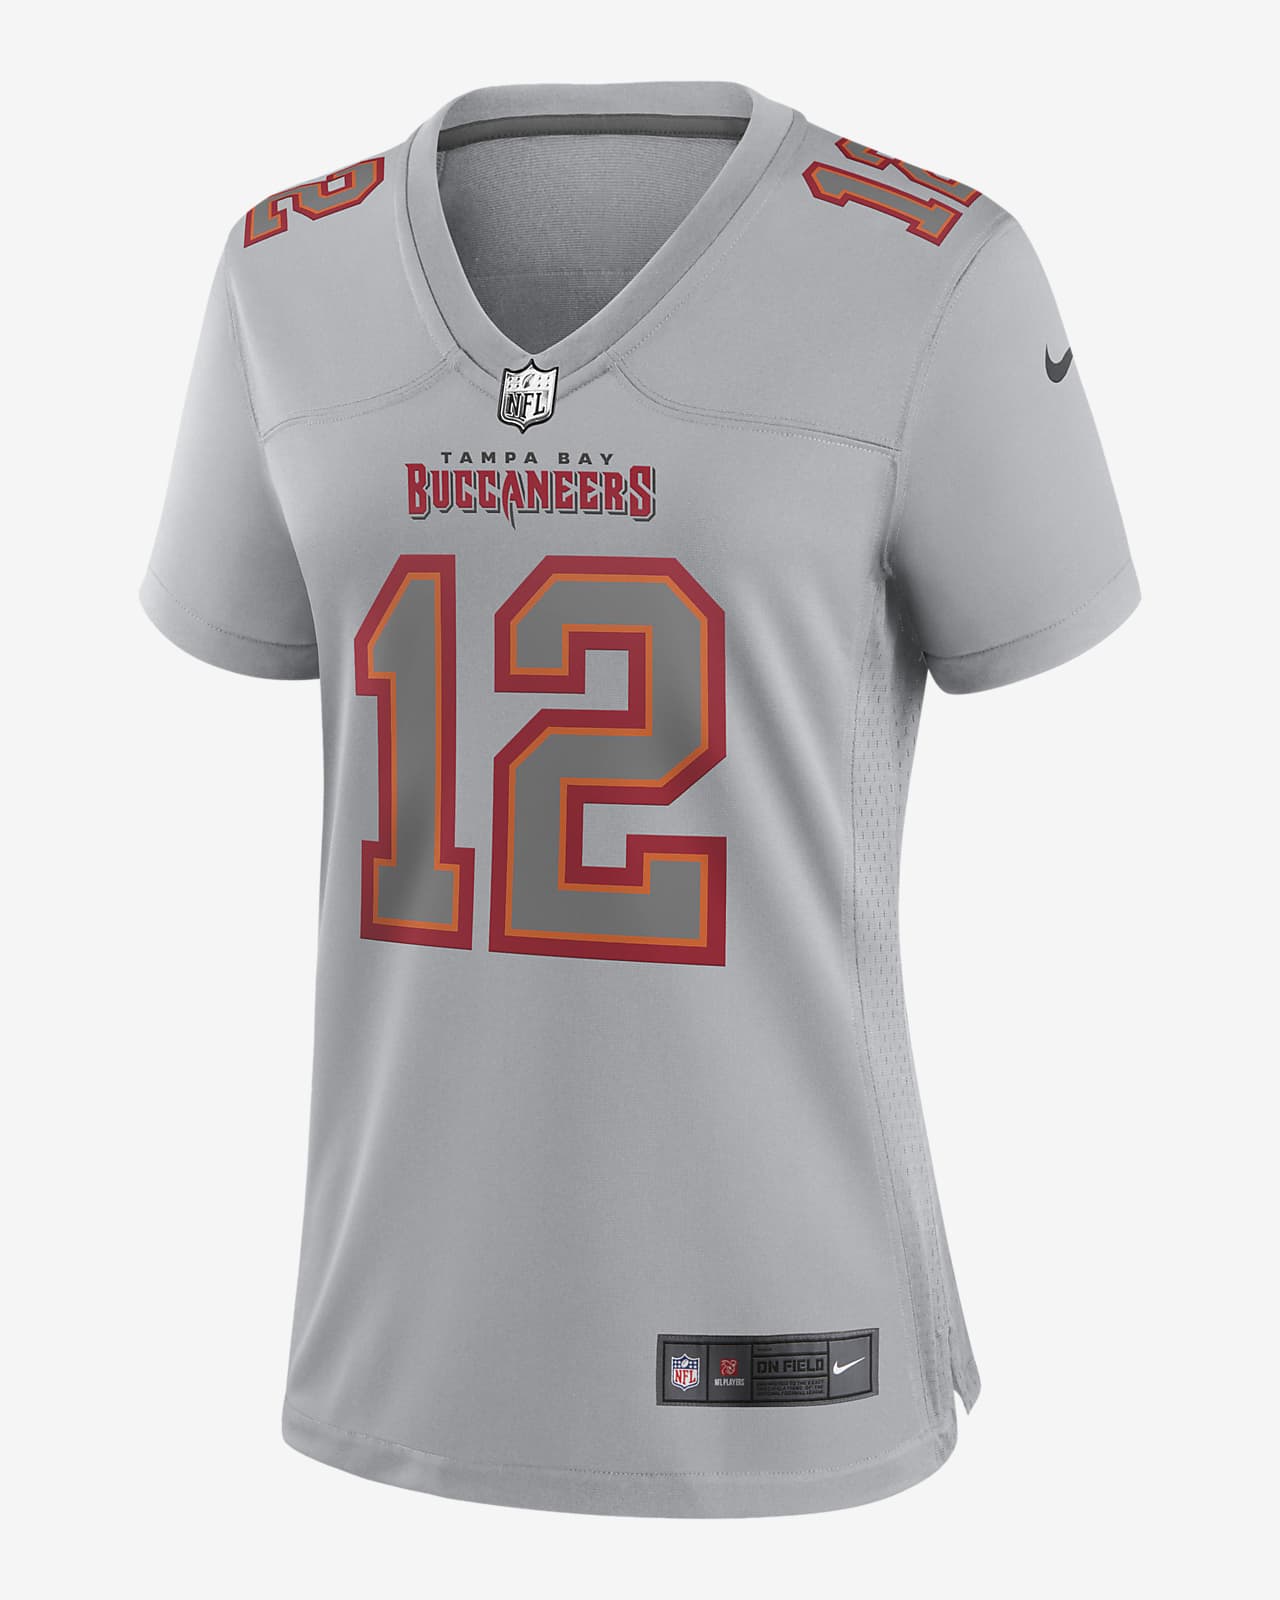 Women's Nike Tom Brady Gray Tampa Bay Buccaneers Atmosphere Fashion Game Jersey Size: Medium